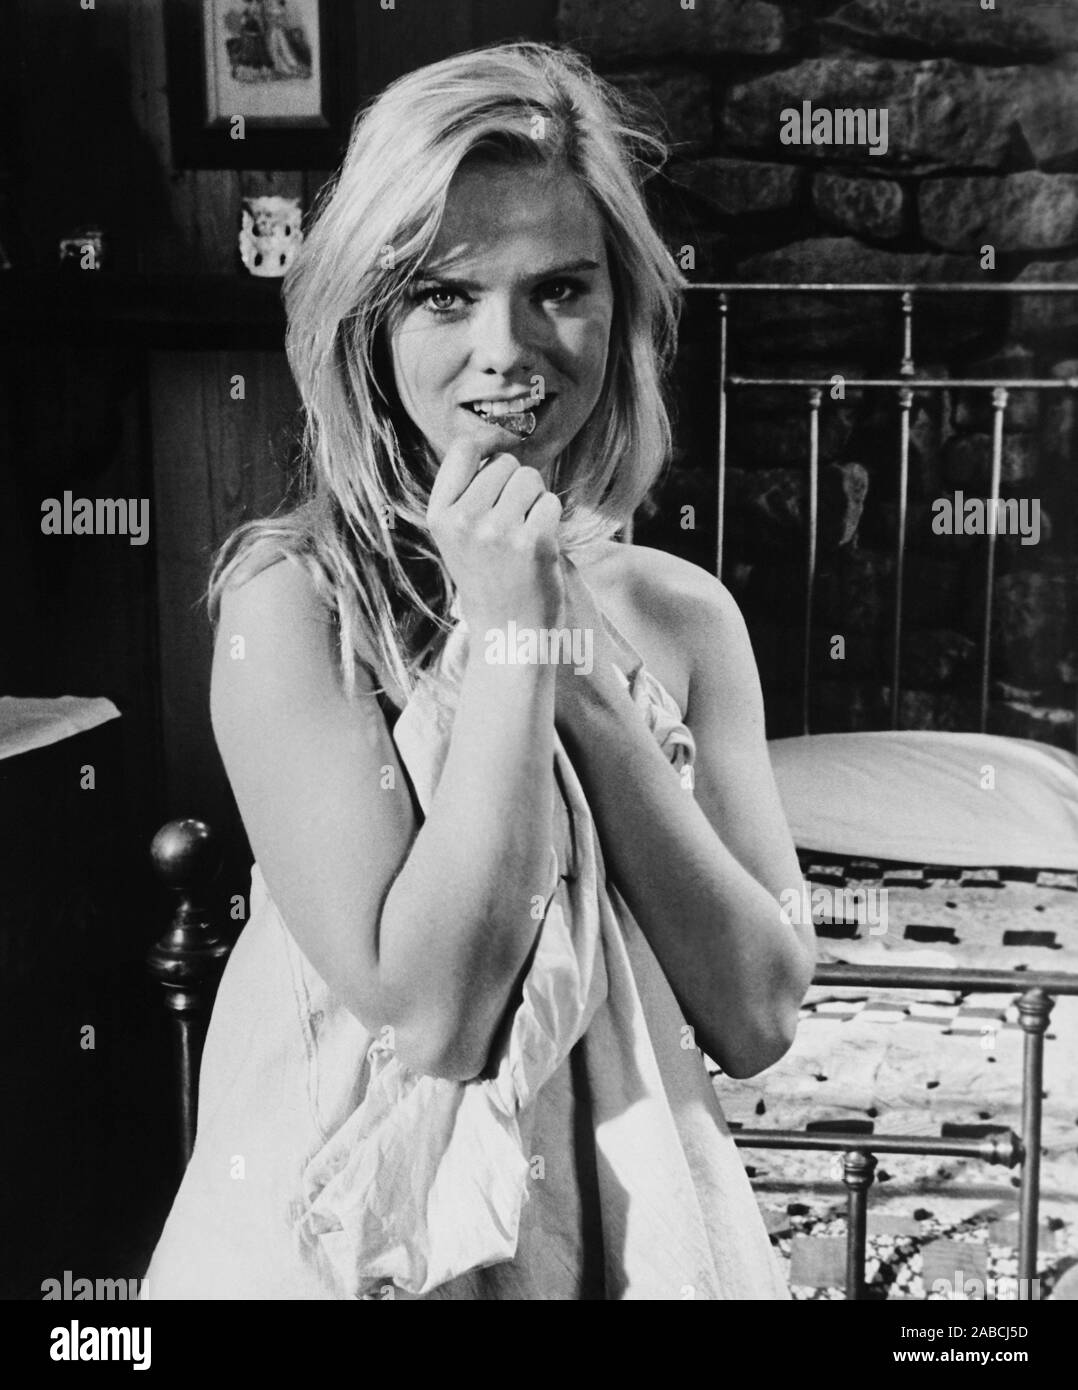 FIRECREEK, Brooke Bundy, 1968 Stock Photo - Alamy